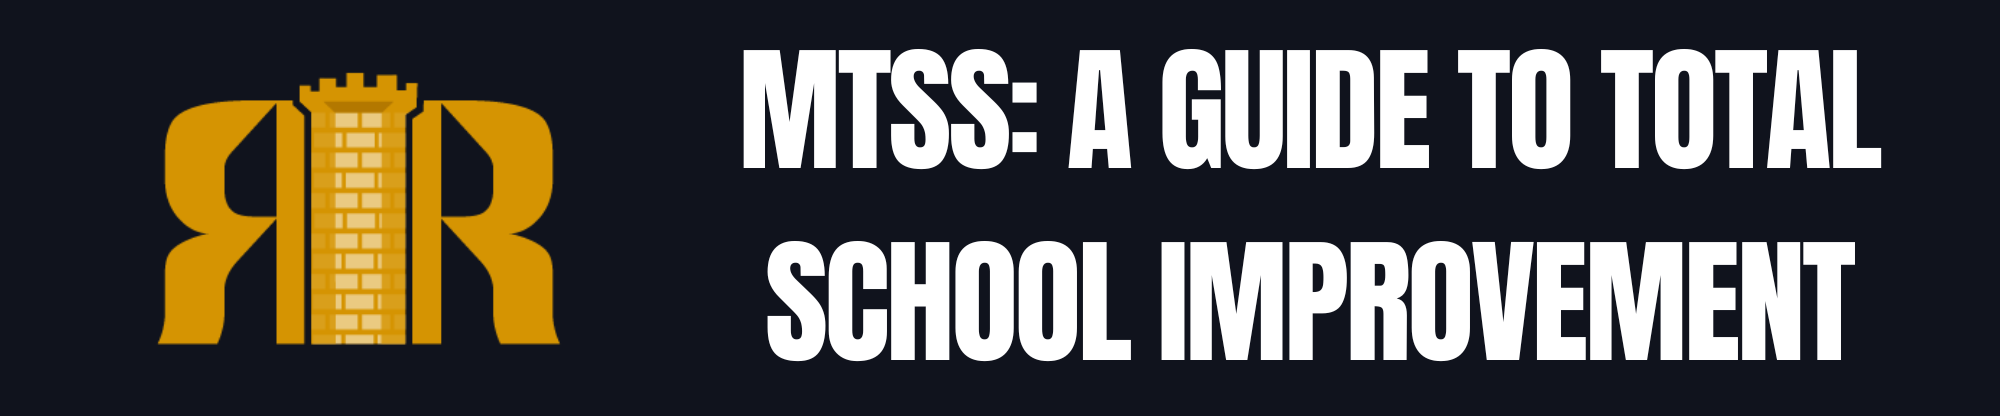 roanoke rapids logo - MTSS: a guide to total school improvement